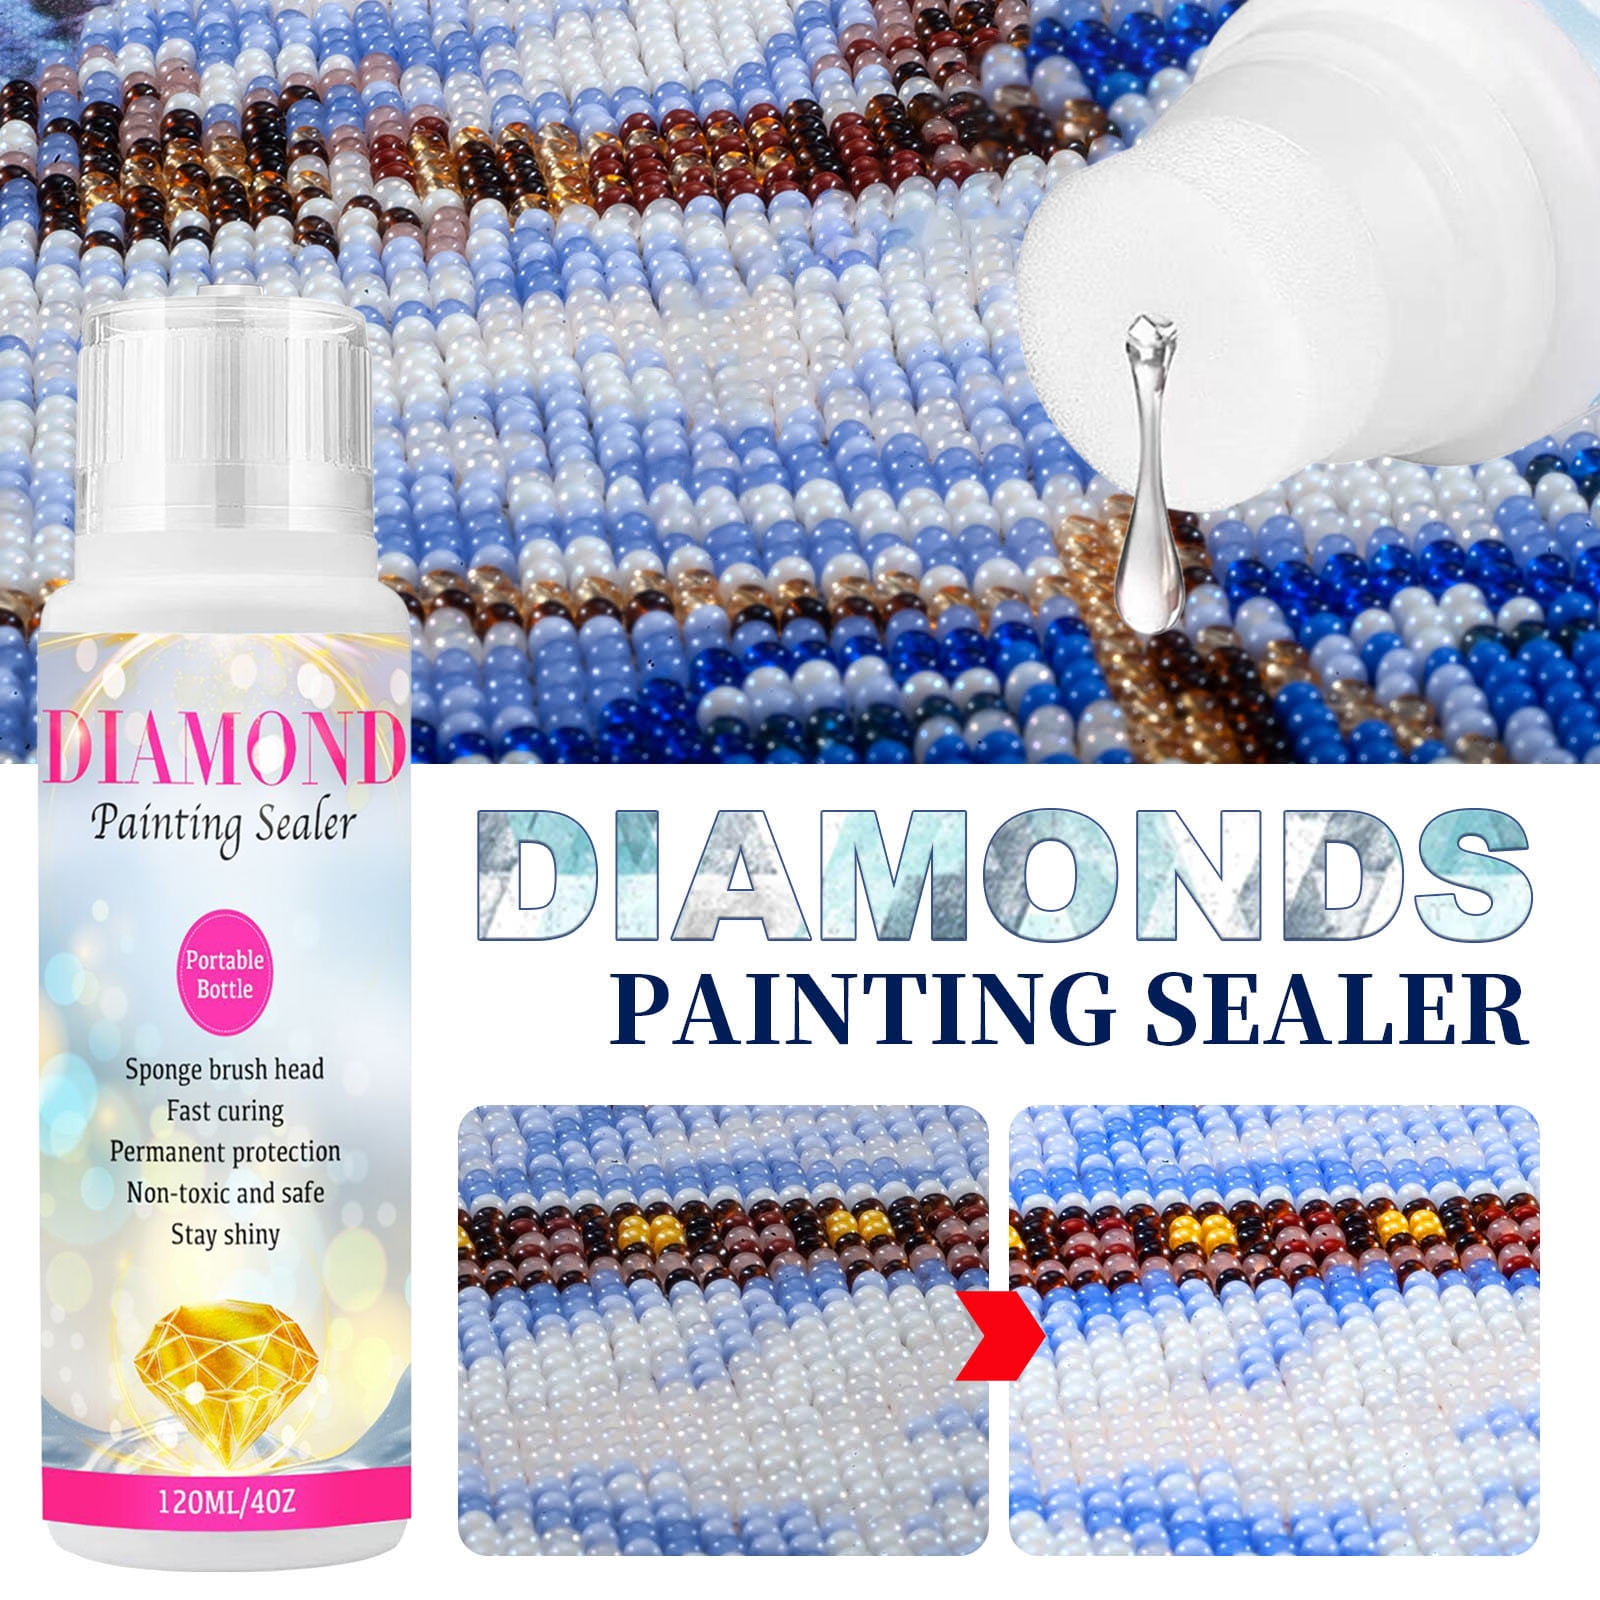 hoksml Christmas Clearance Deals Diamond Art Painting Sealer 1 Pack 120ML  5D Diamond Art Painting Art Glue With Sponge Head Fast Drying Prevent  Falling Off 